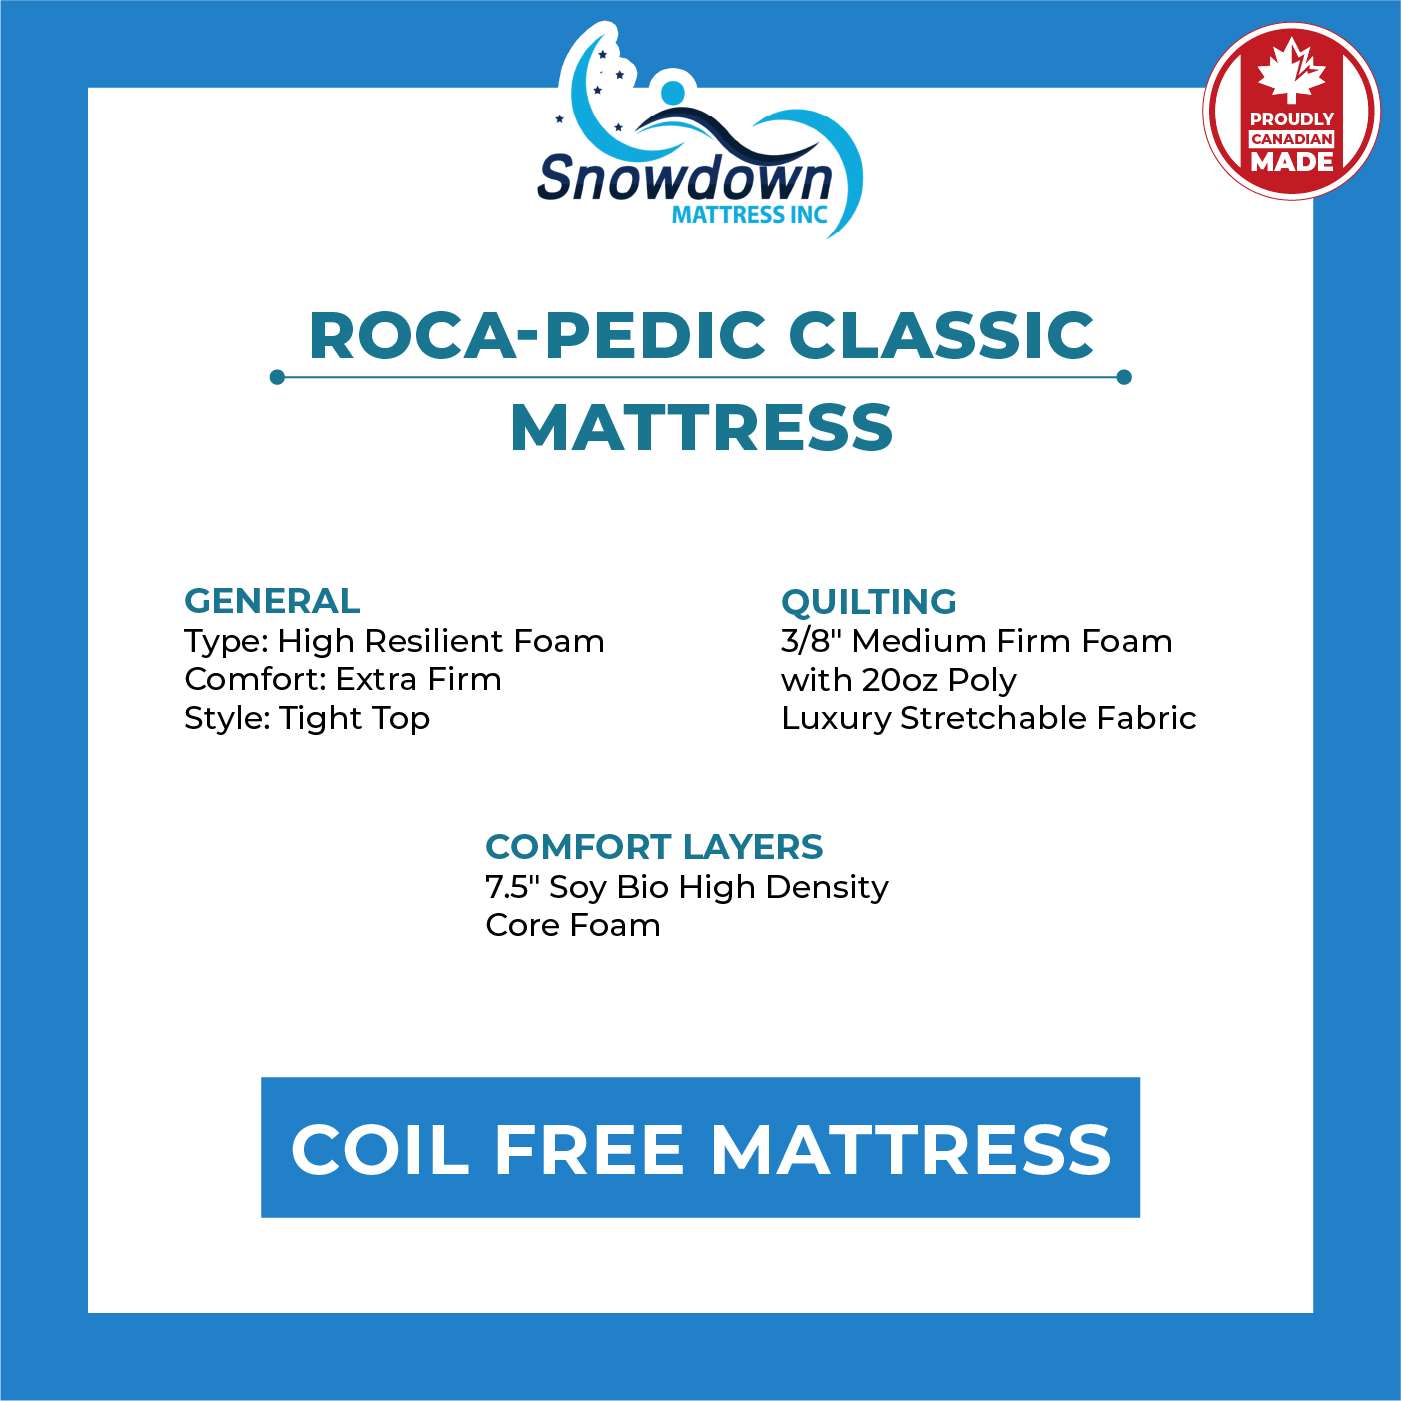 Roca-Pedic Classic Mattress